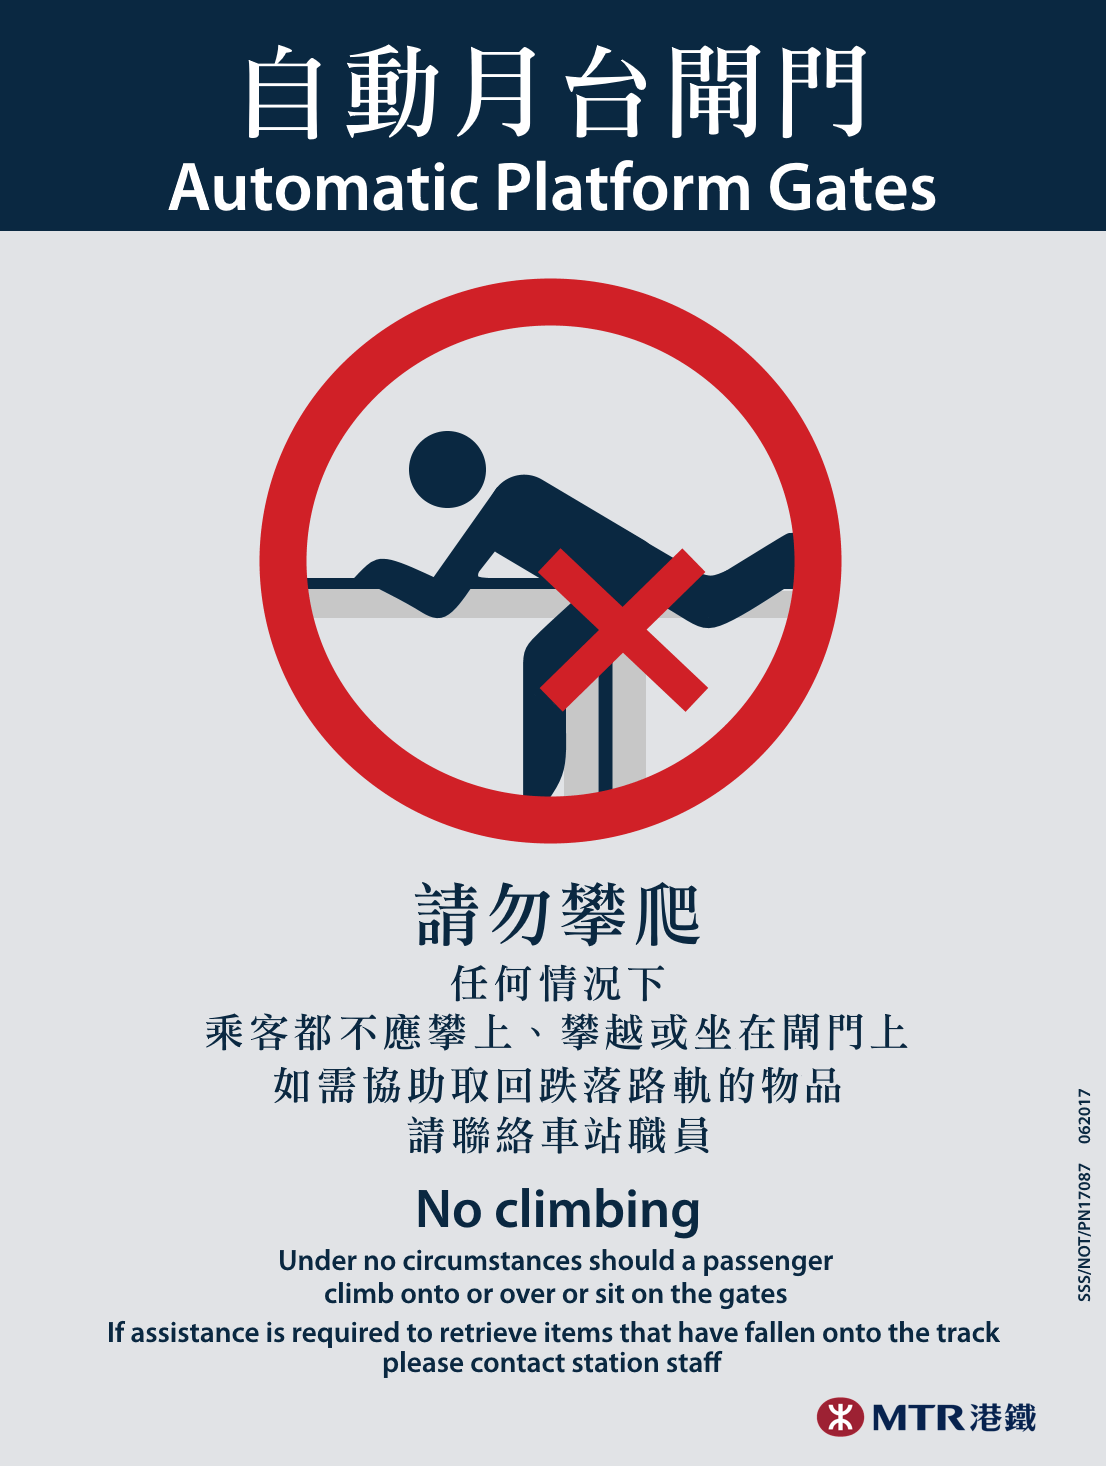 MTR Automatic Platform Gates (Do not climb) sticker